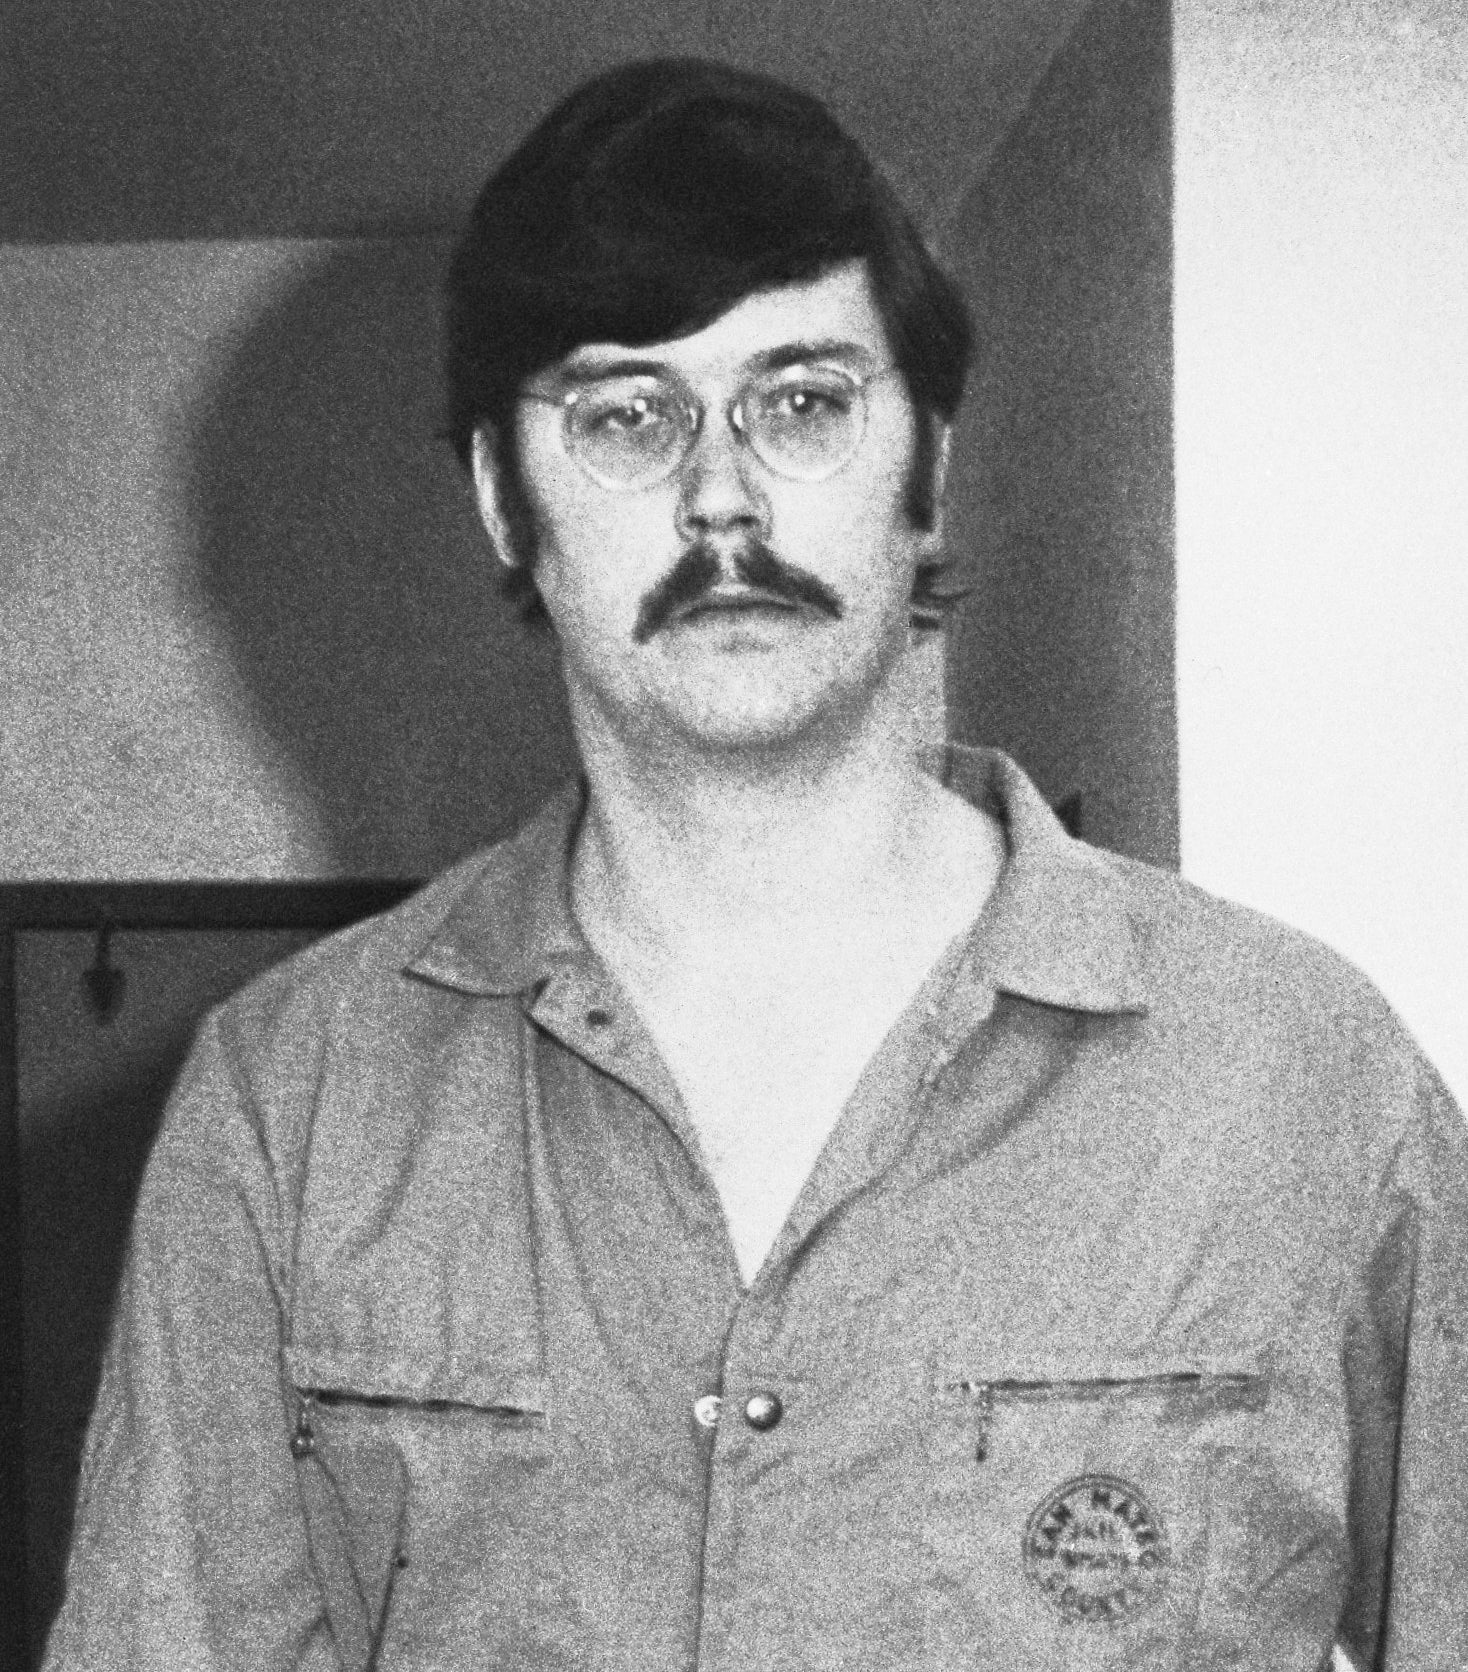 David in his prison uniform with a mustache and glasses